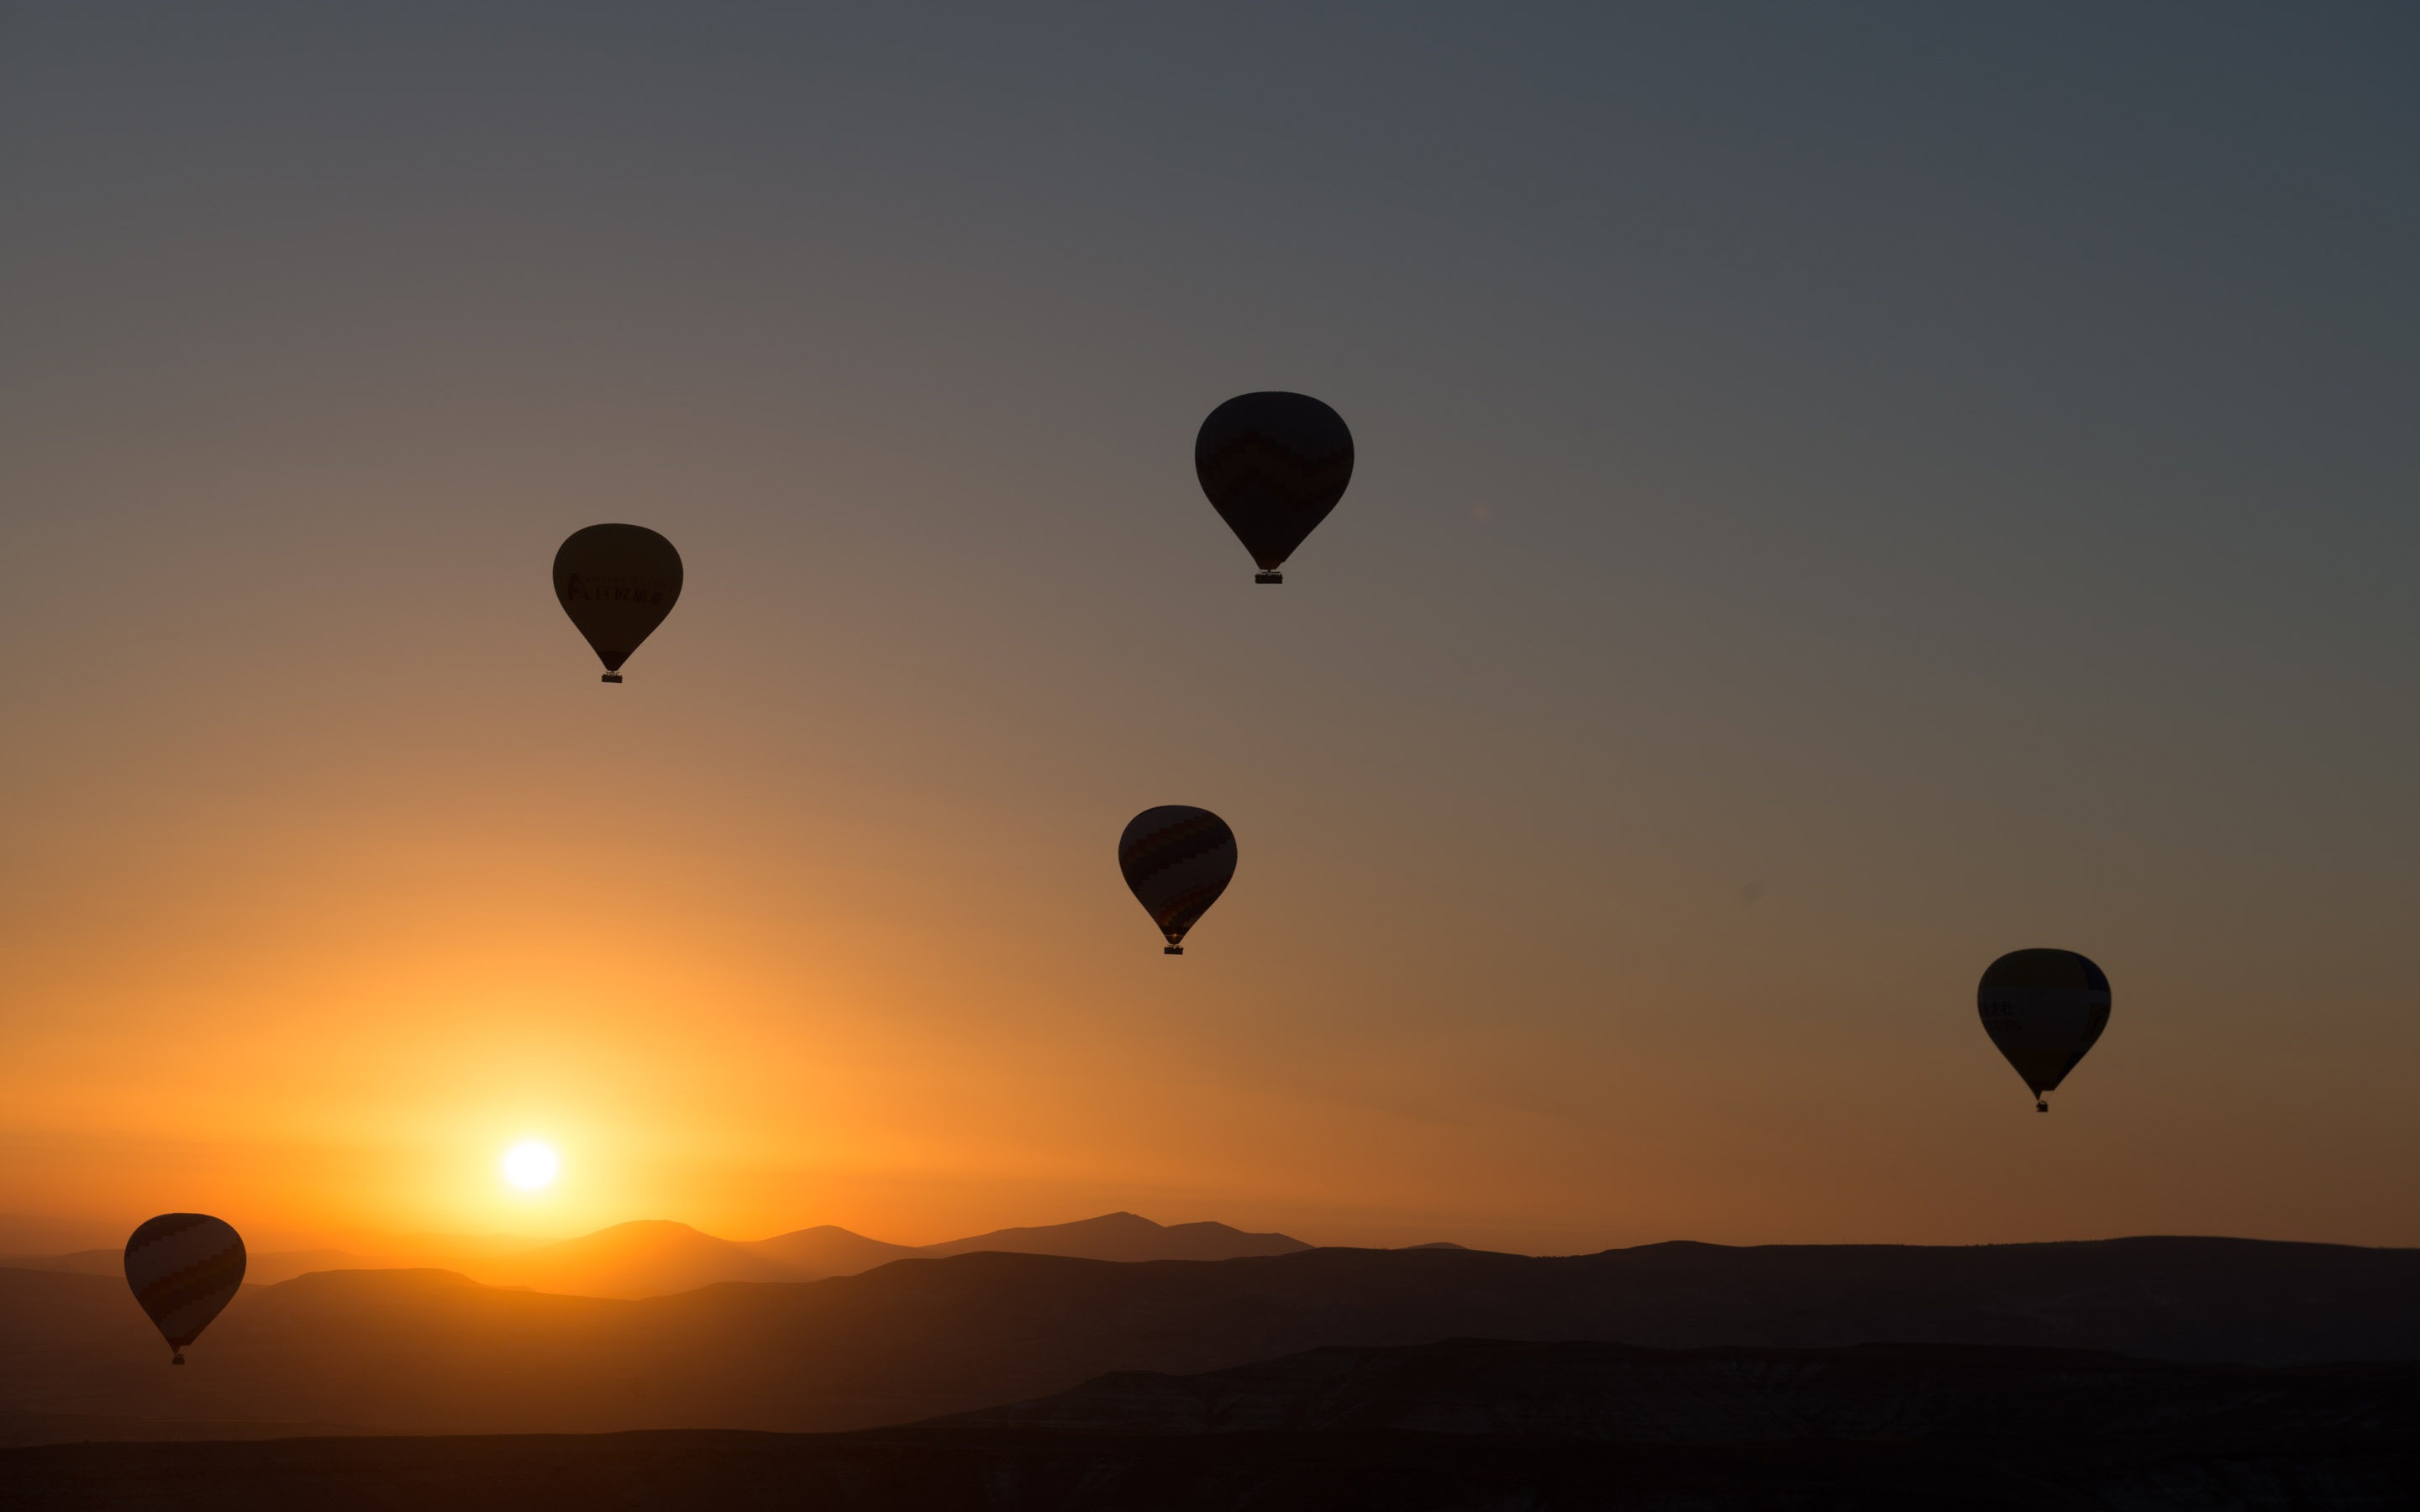 General 2880x1800 hot air balloons sunrise Sun sky mountains hills landscape nature photography low light